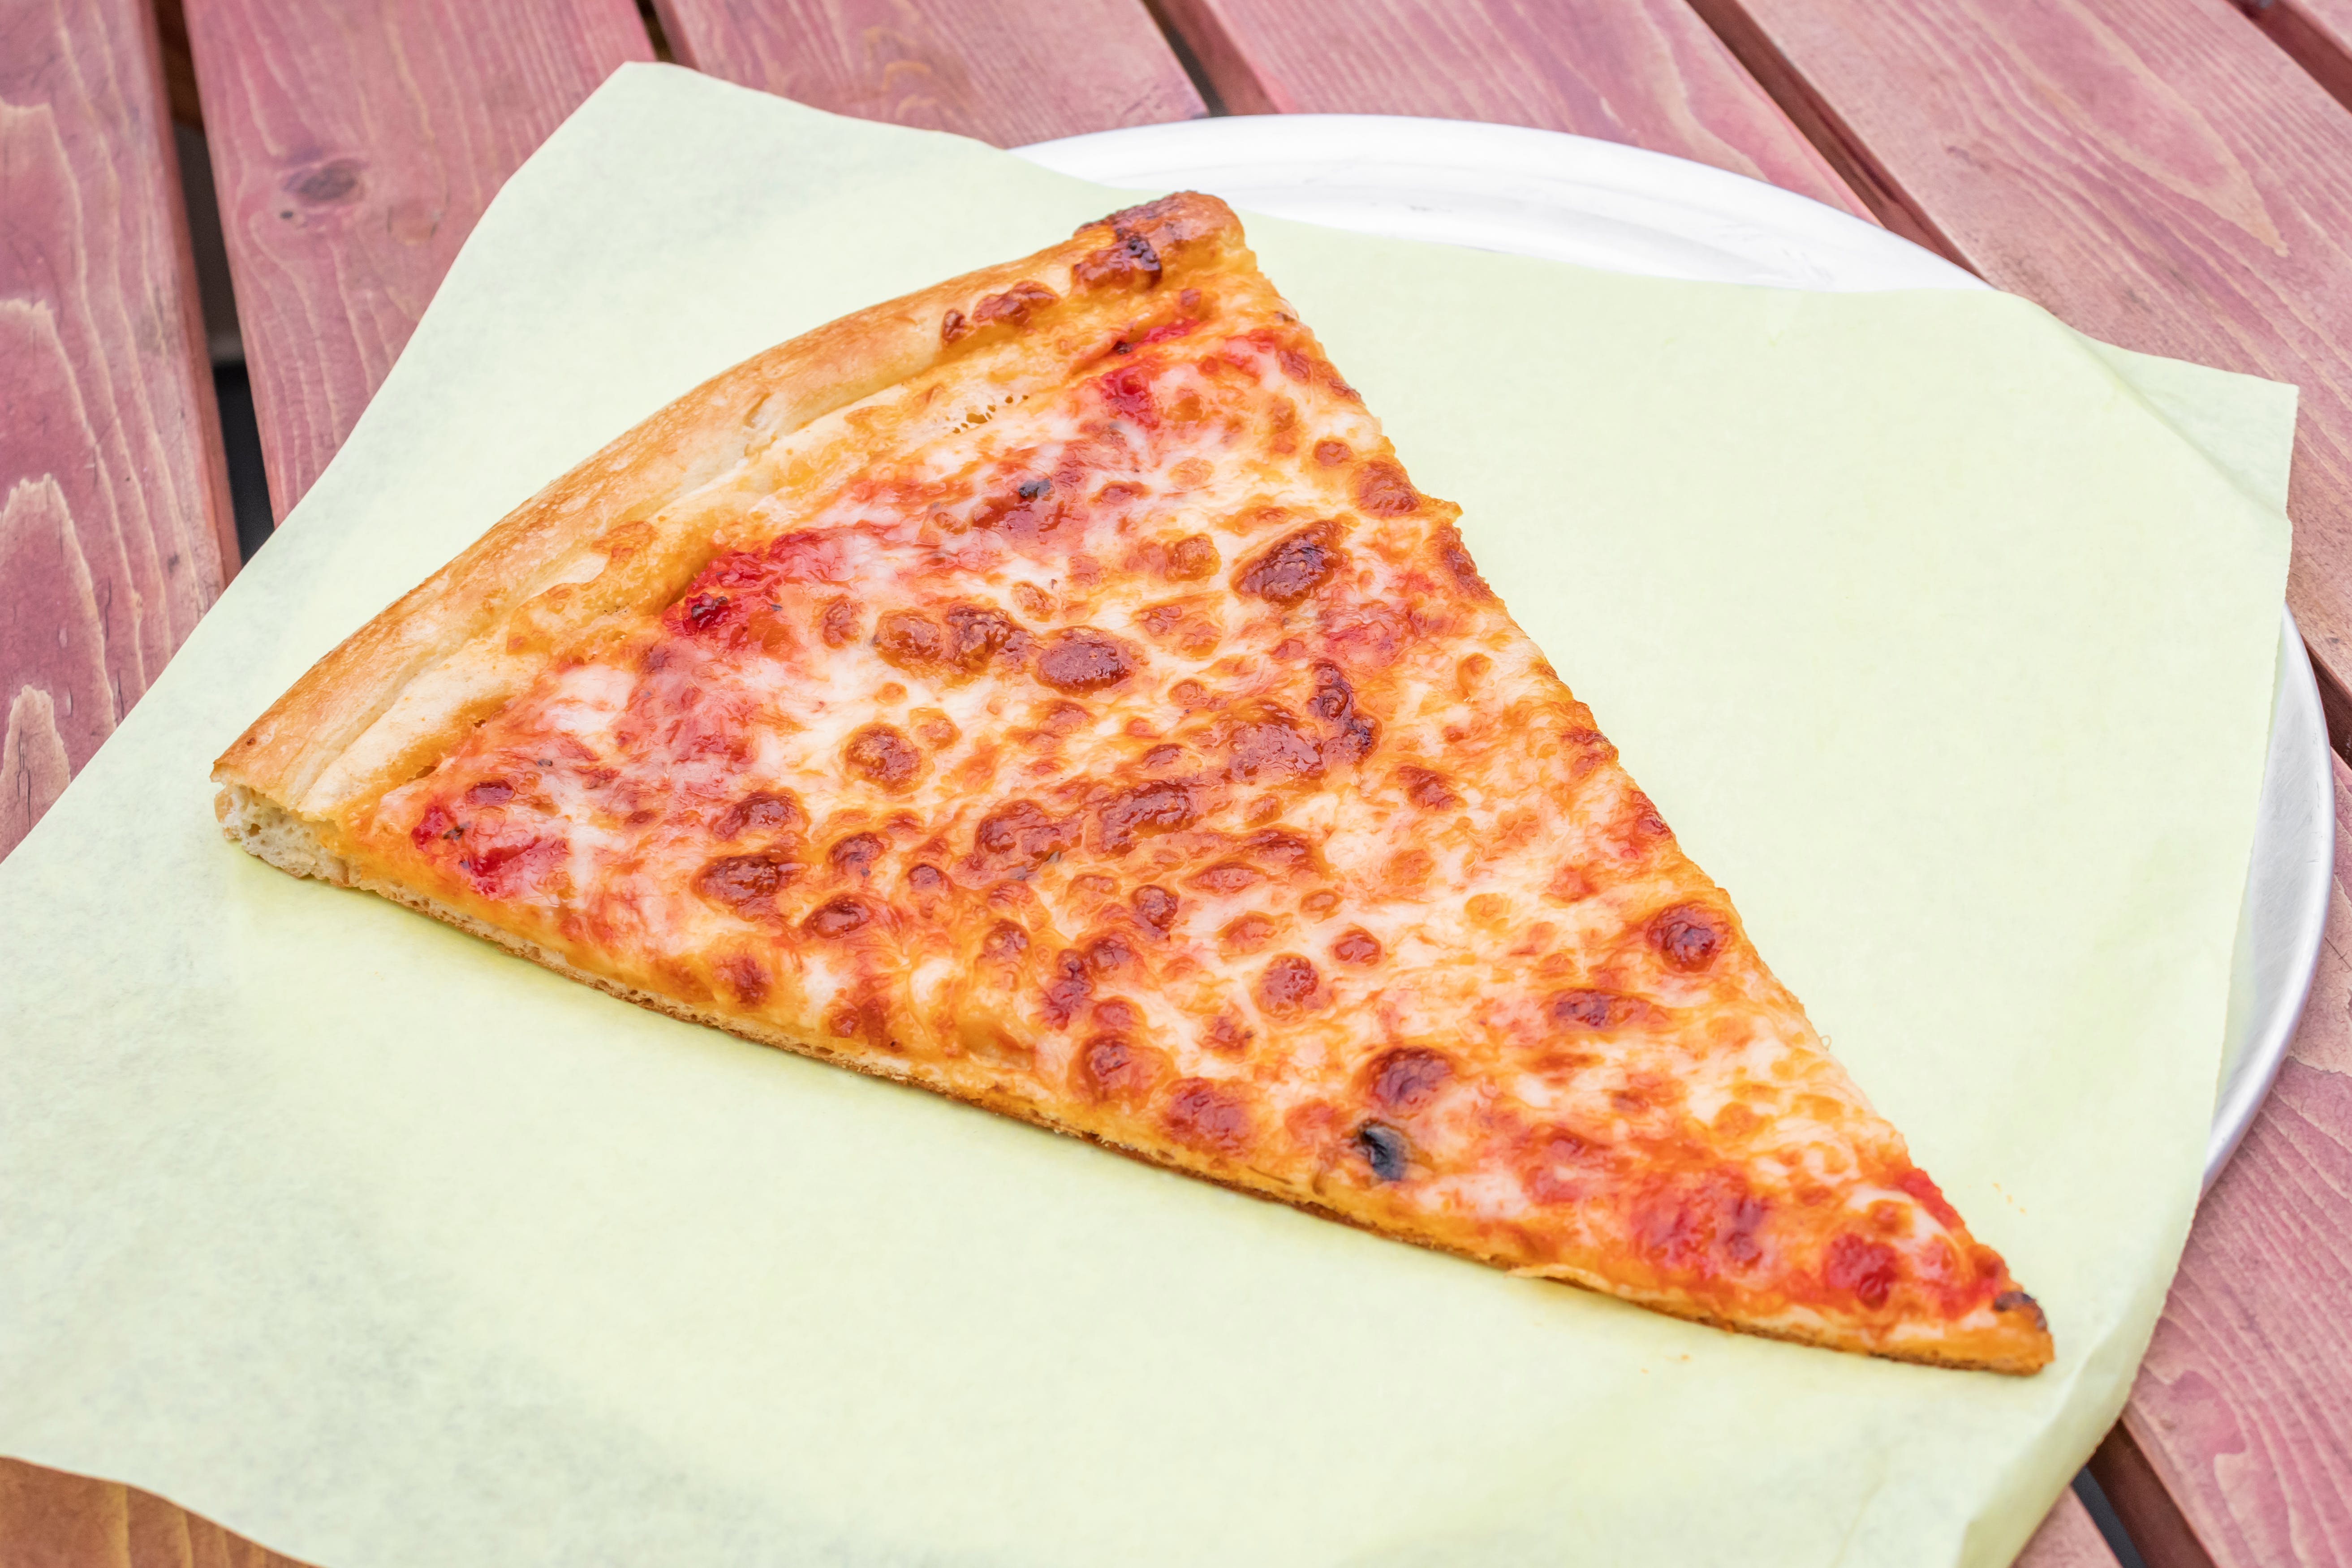 The Slice Pizza hero